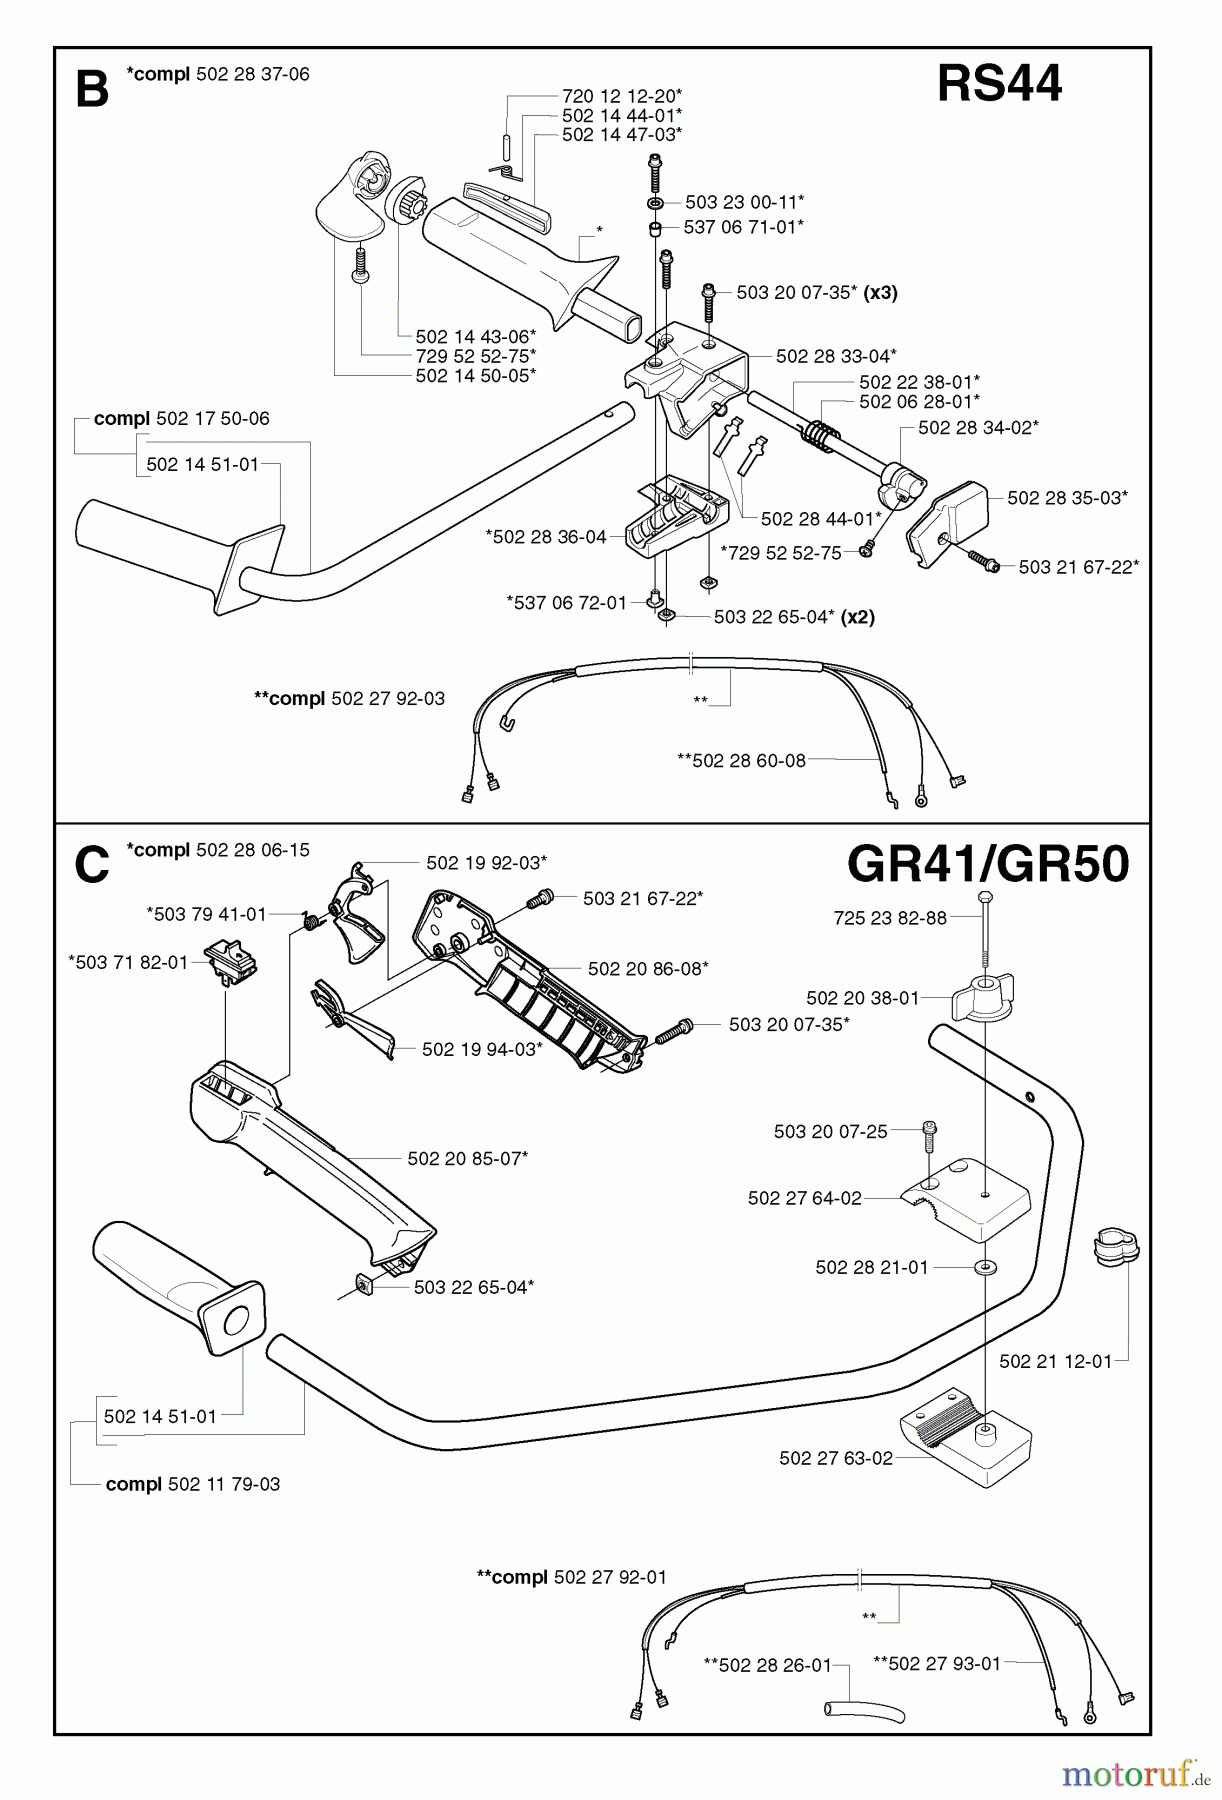  Jonsered Motorsensen, Trimmer RS44 - Jonsered String/Brush Trimmer (2002-08) HANDLE CONTROLS